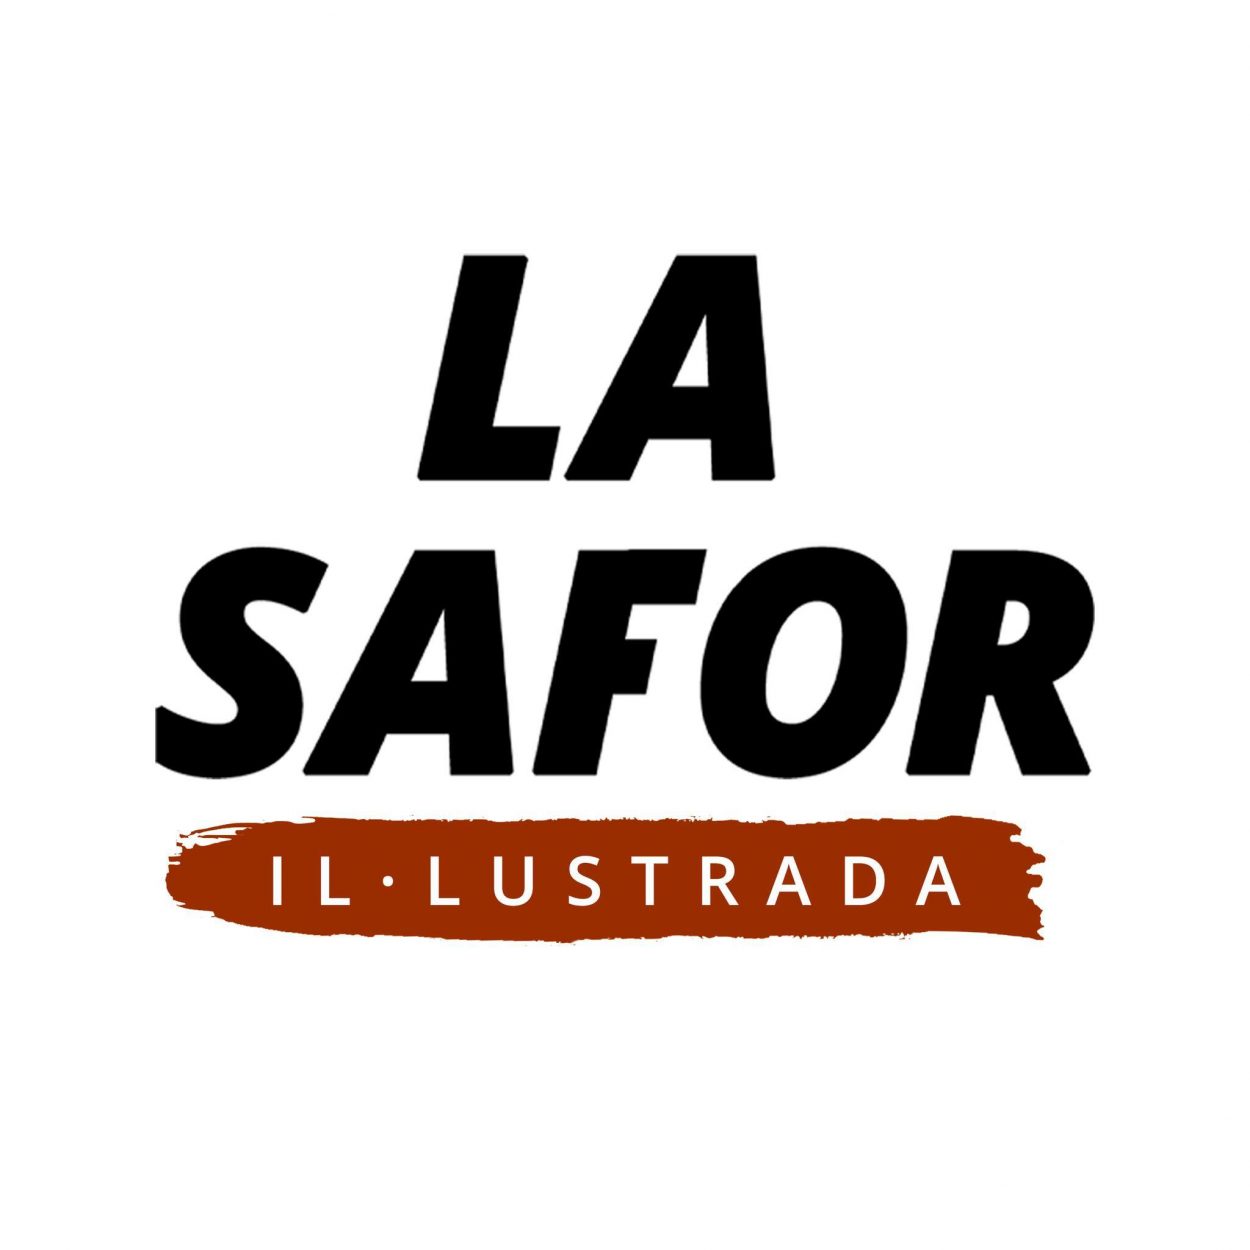 safor ilustrada logo